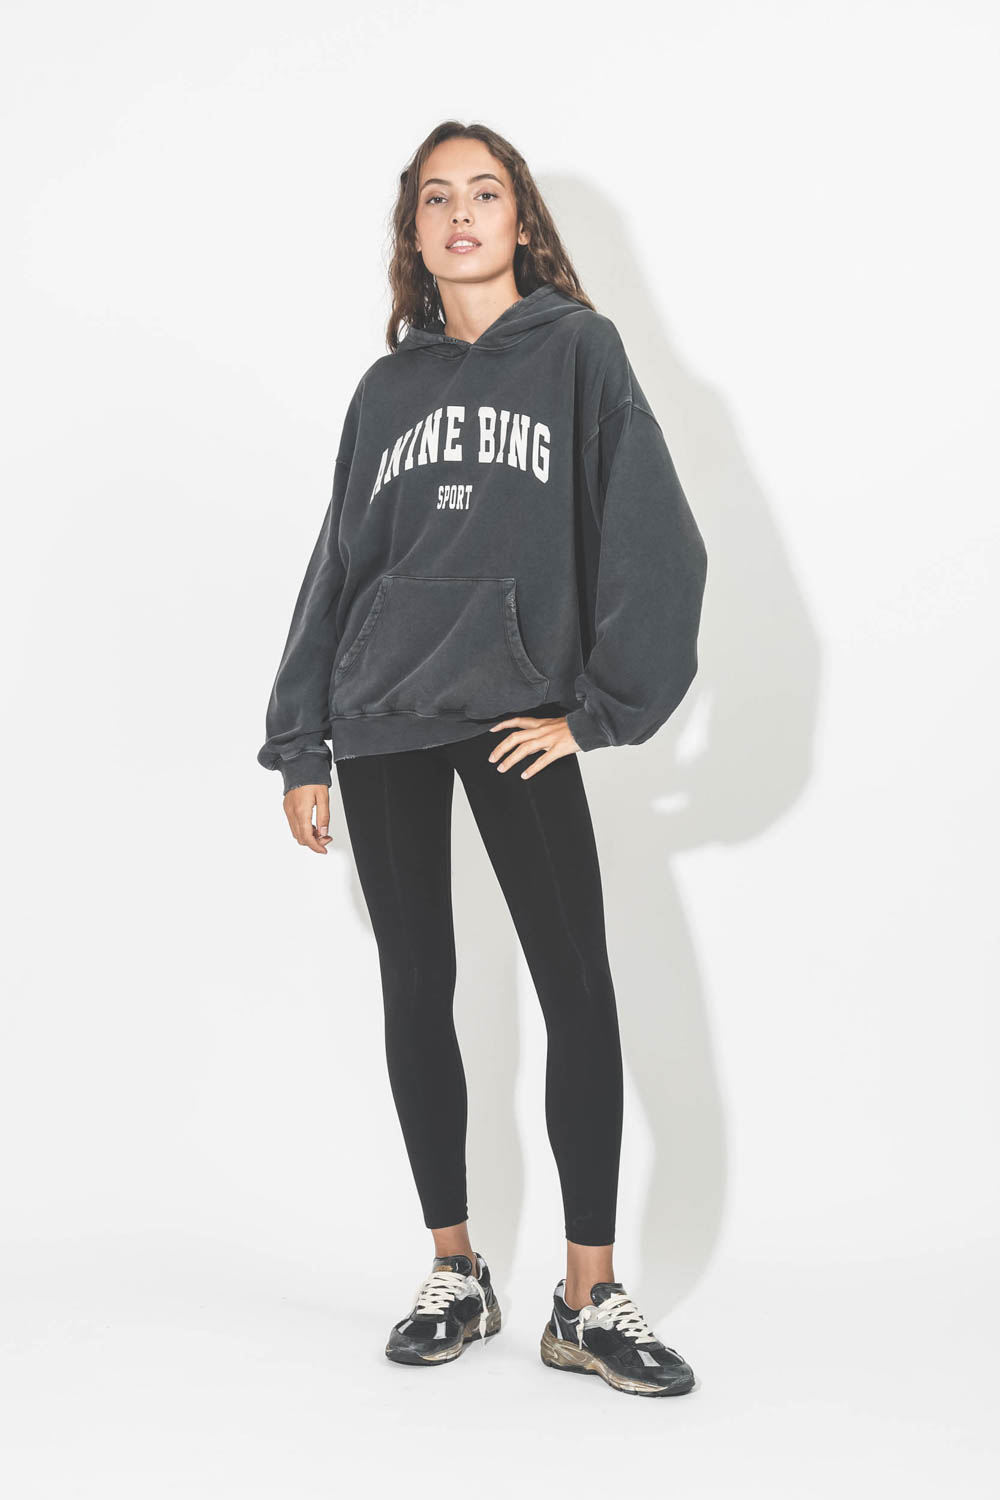 Anine Bing - Anine Bing Harvey Hoodie Dark Wash Black on Designer Wardrobe